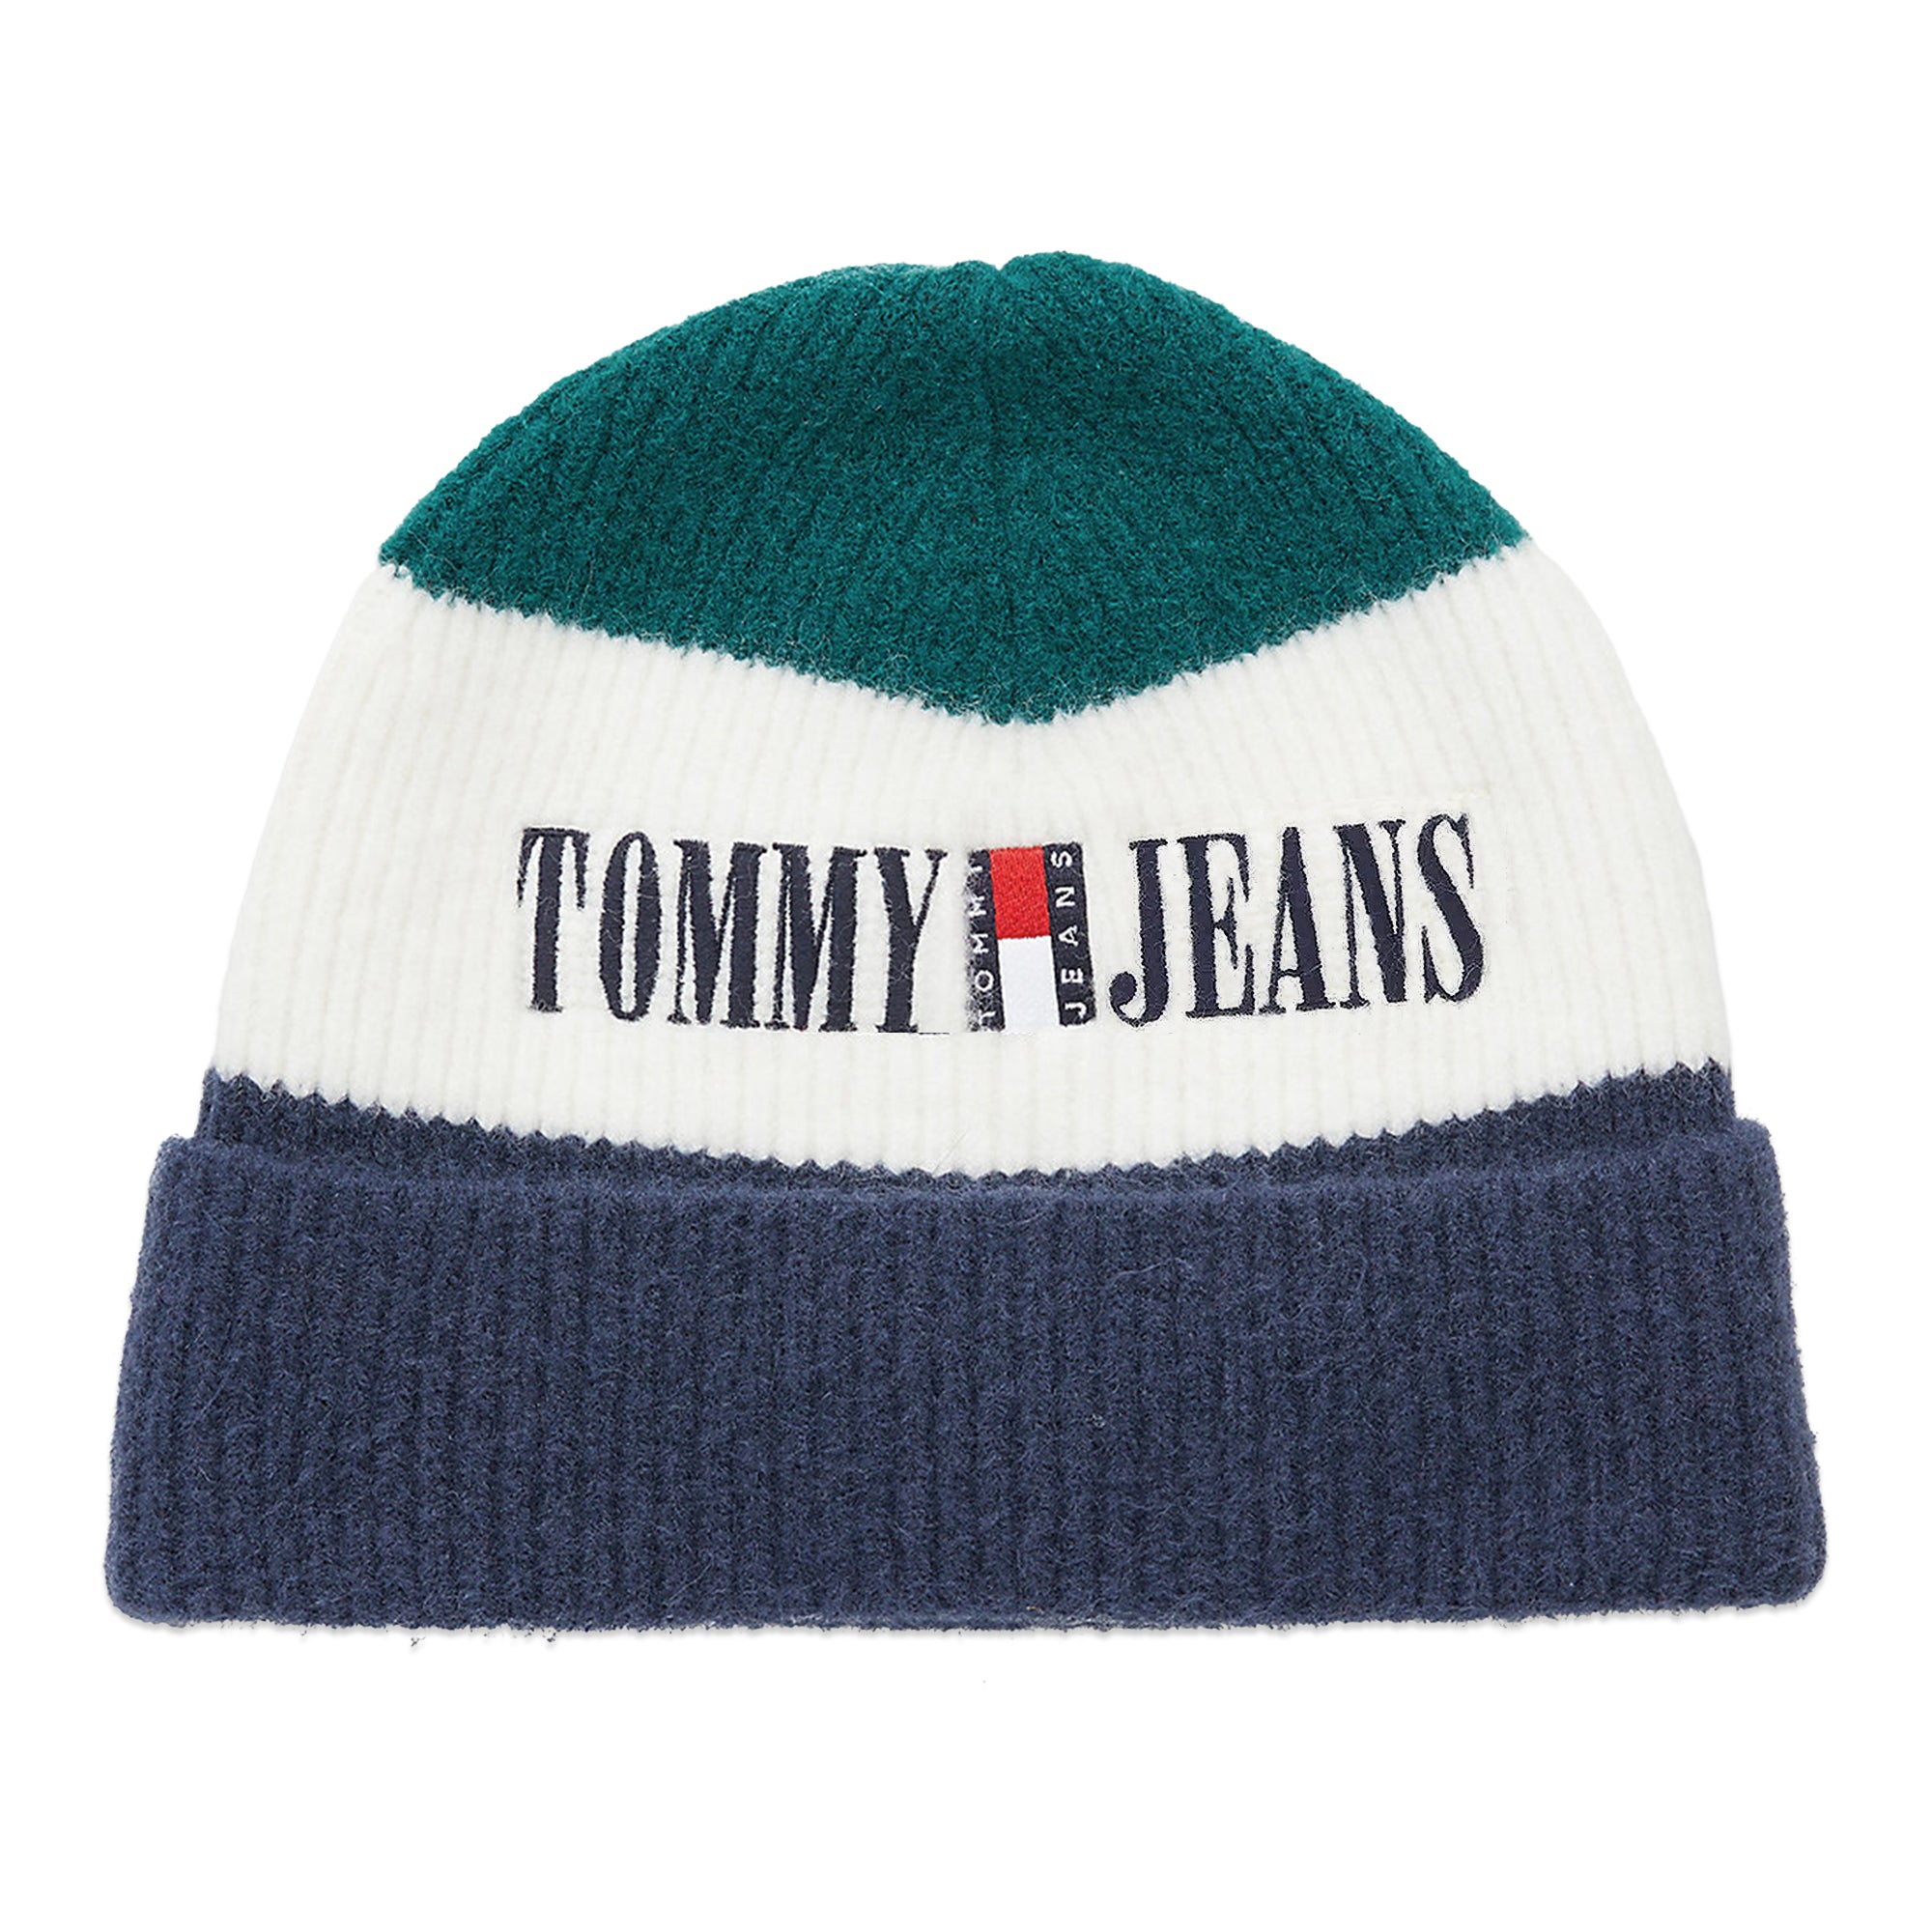 Black Cap - Tommy Jeans Sport